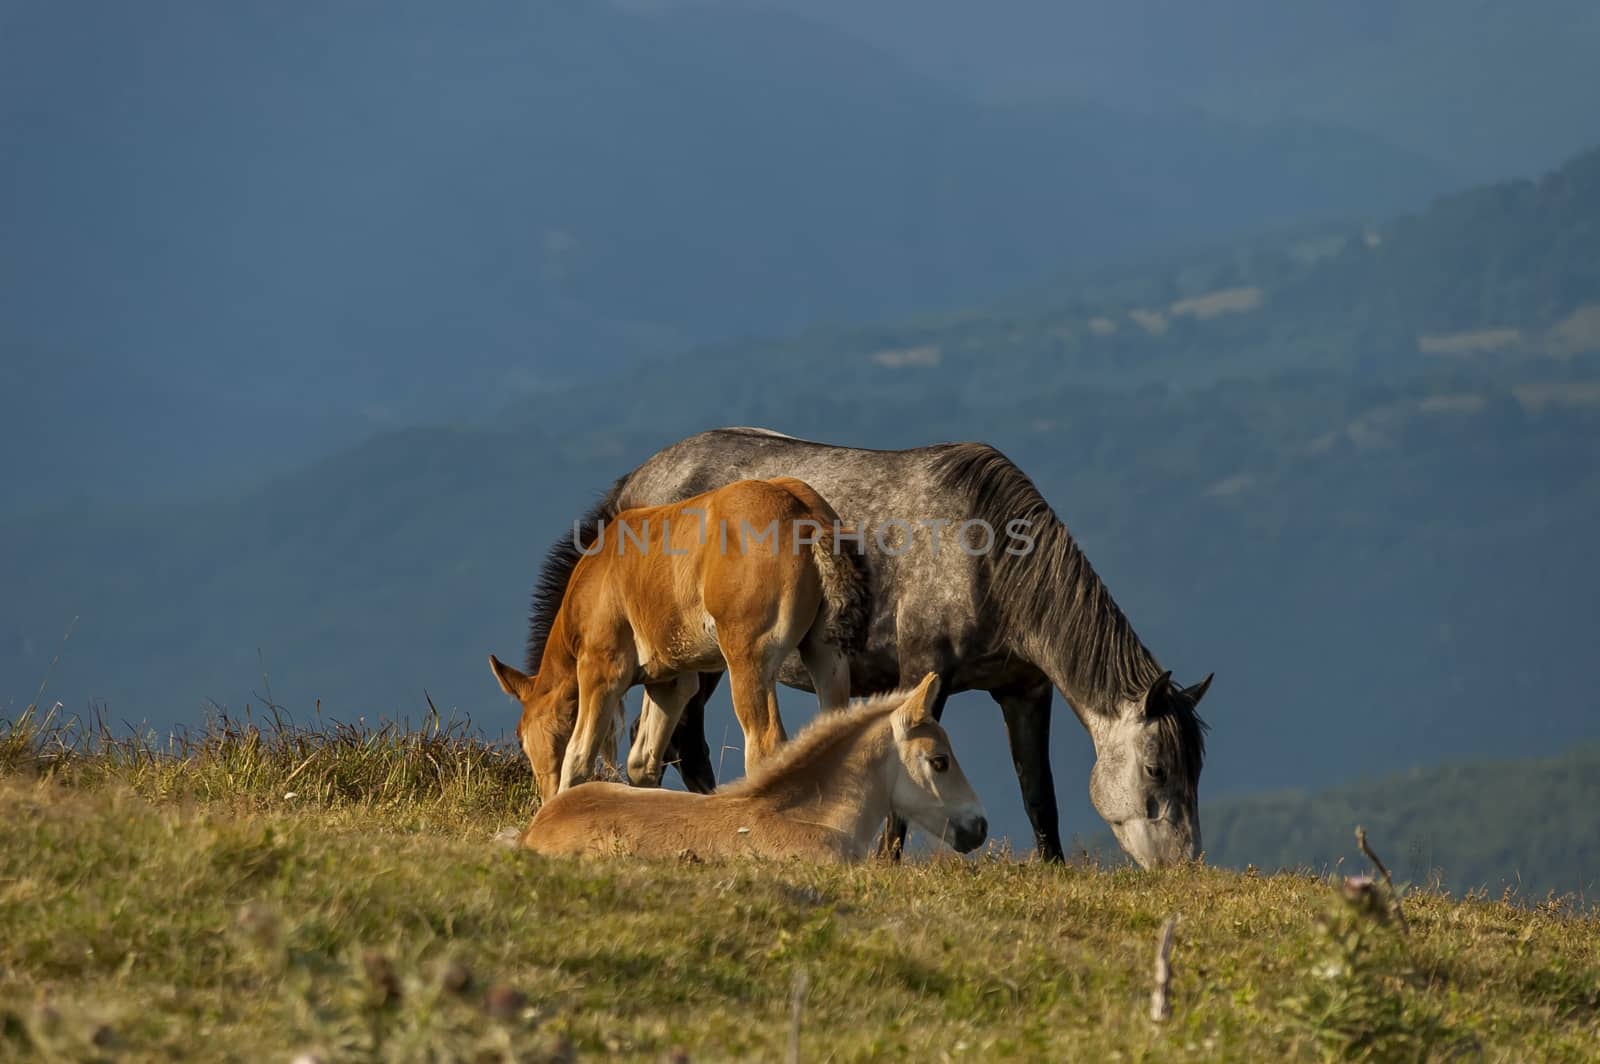 Mountain landscape and wild horses in Central Balkan, Stara planina, Beklemeto or Trojan pass, Bulgaria